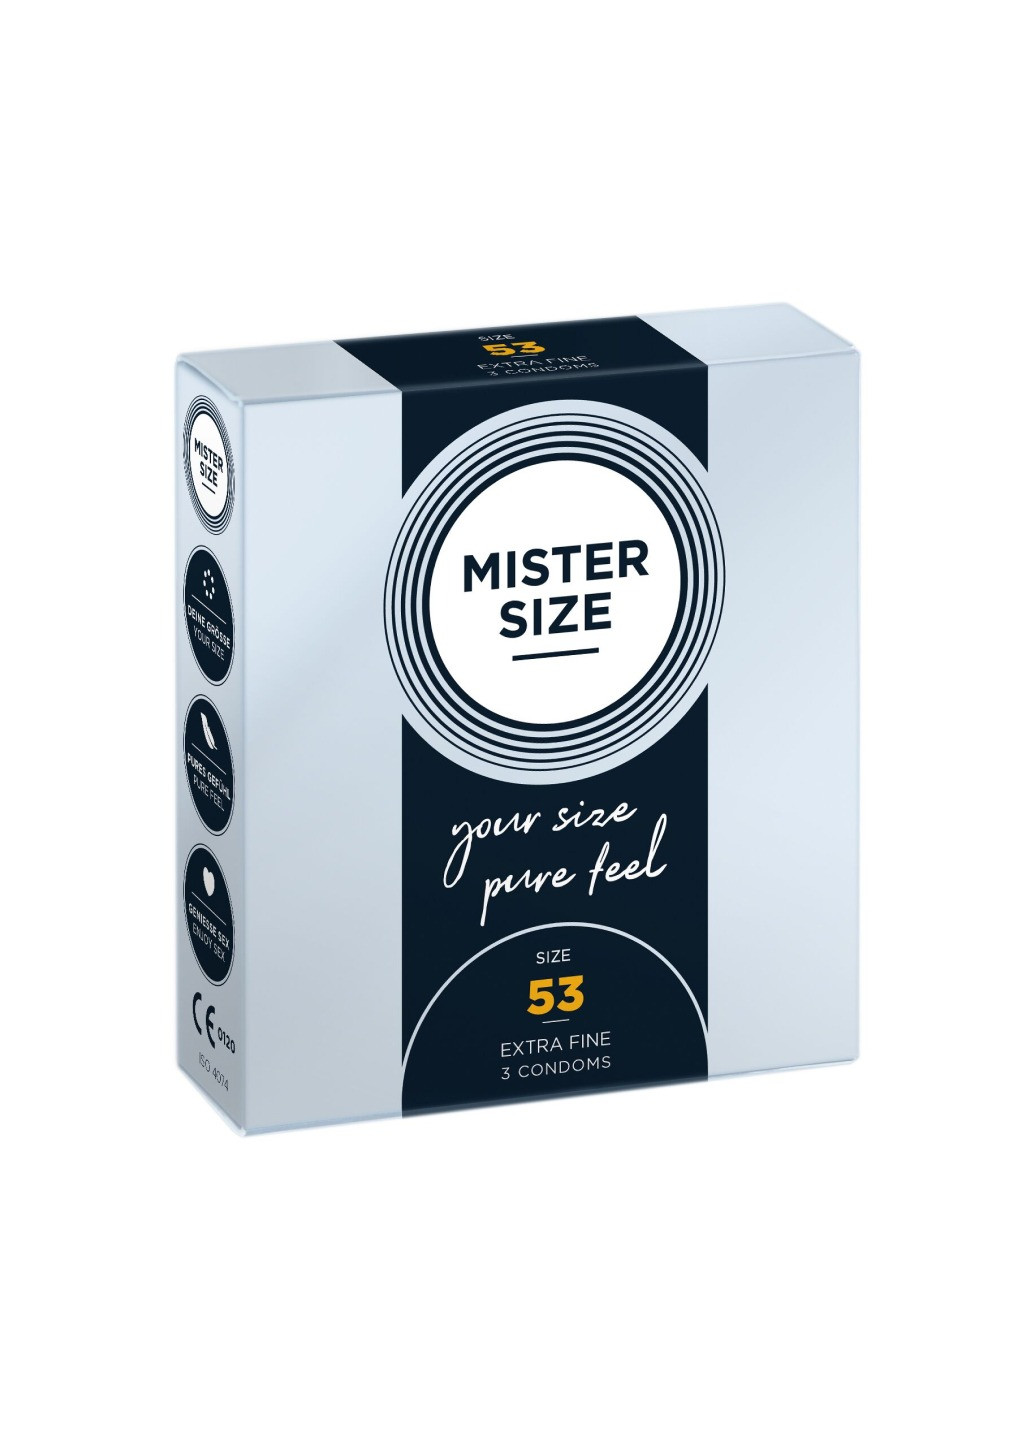 Презервативы Mister Size - pure feel - 53 (3 condoms), толщина 0,05 мм No Brand (276905772)